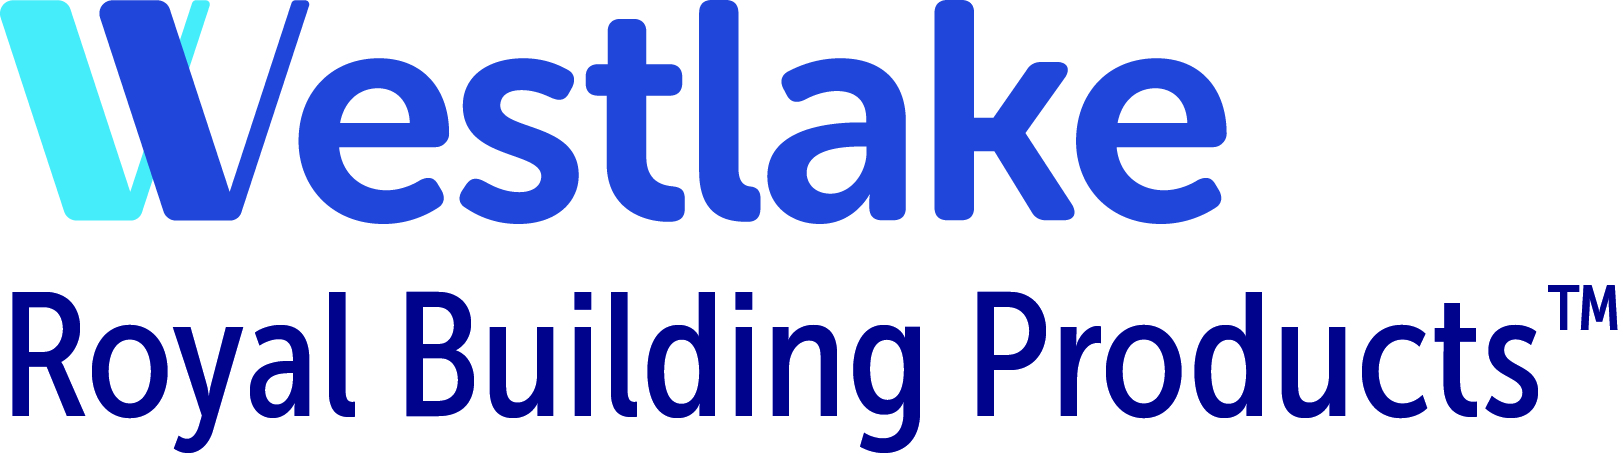 Westlake Royal Building Products Logo.jpg